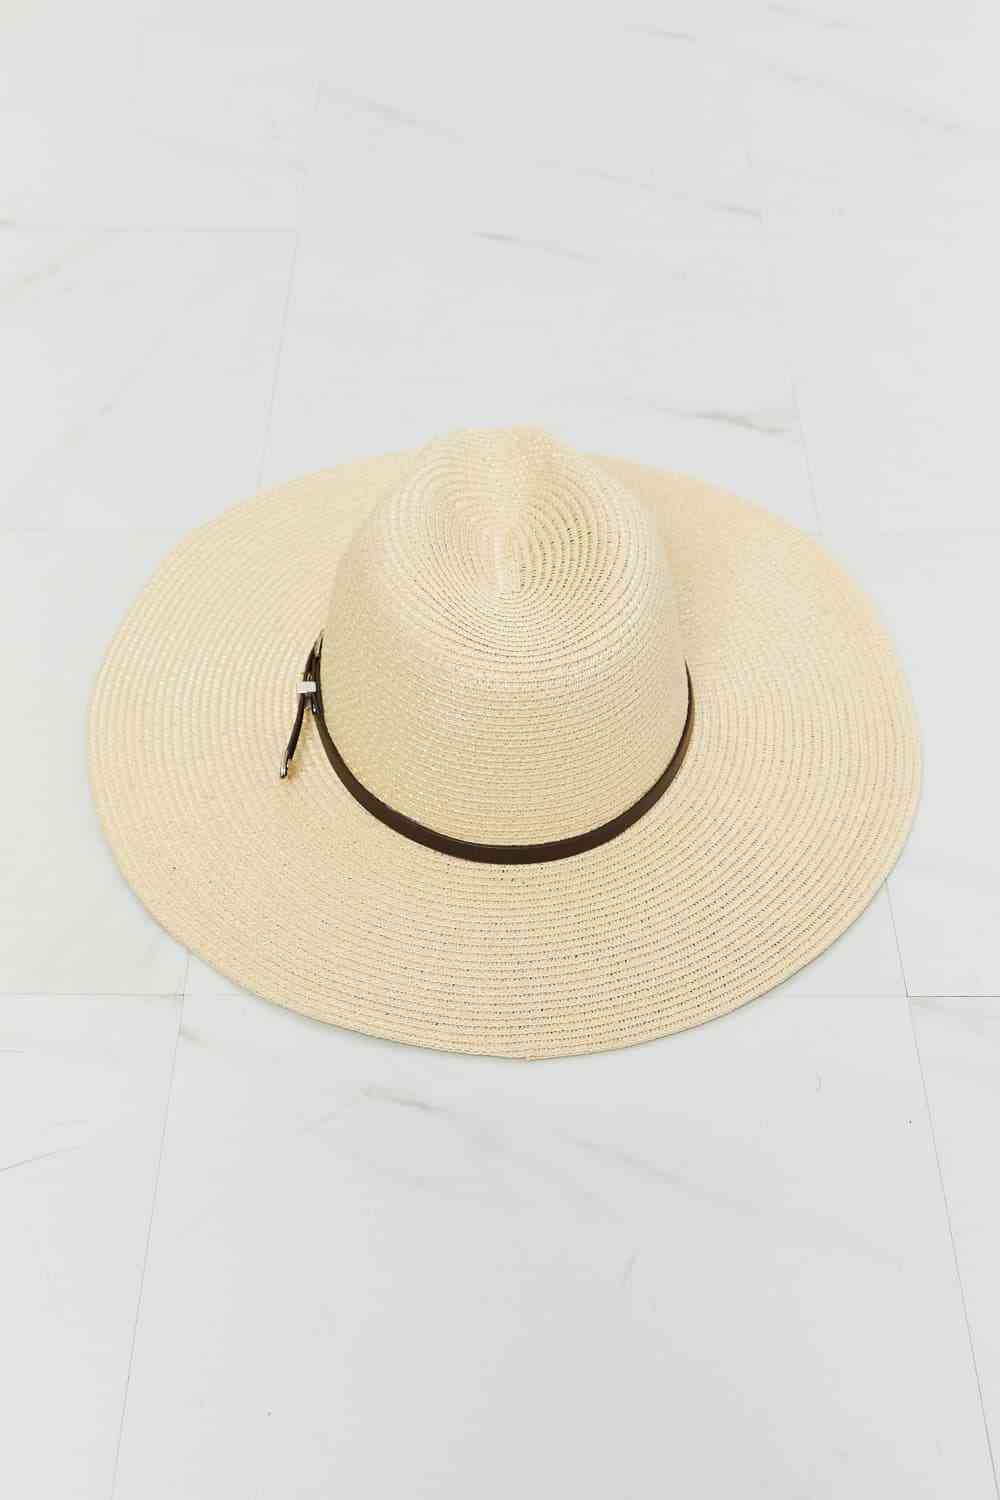 Fame Boho Summer Straw Fedora Hat - Kyublis DZigns